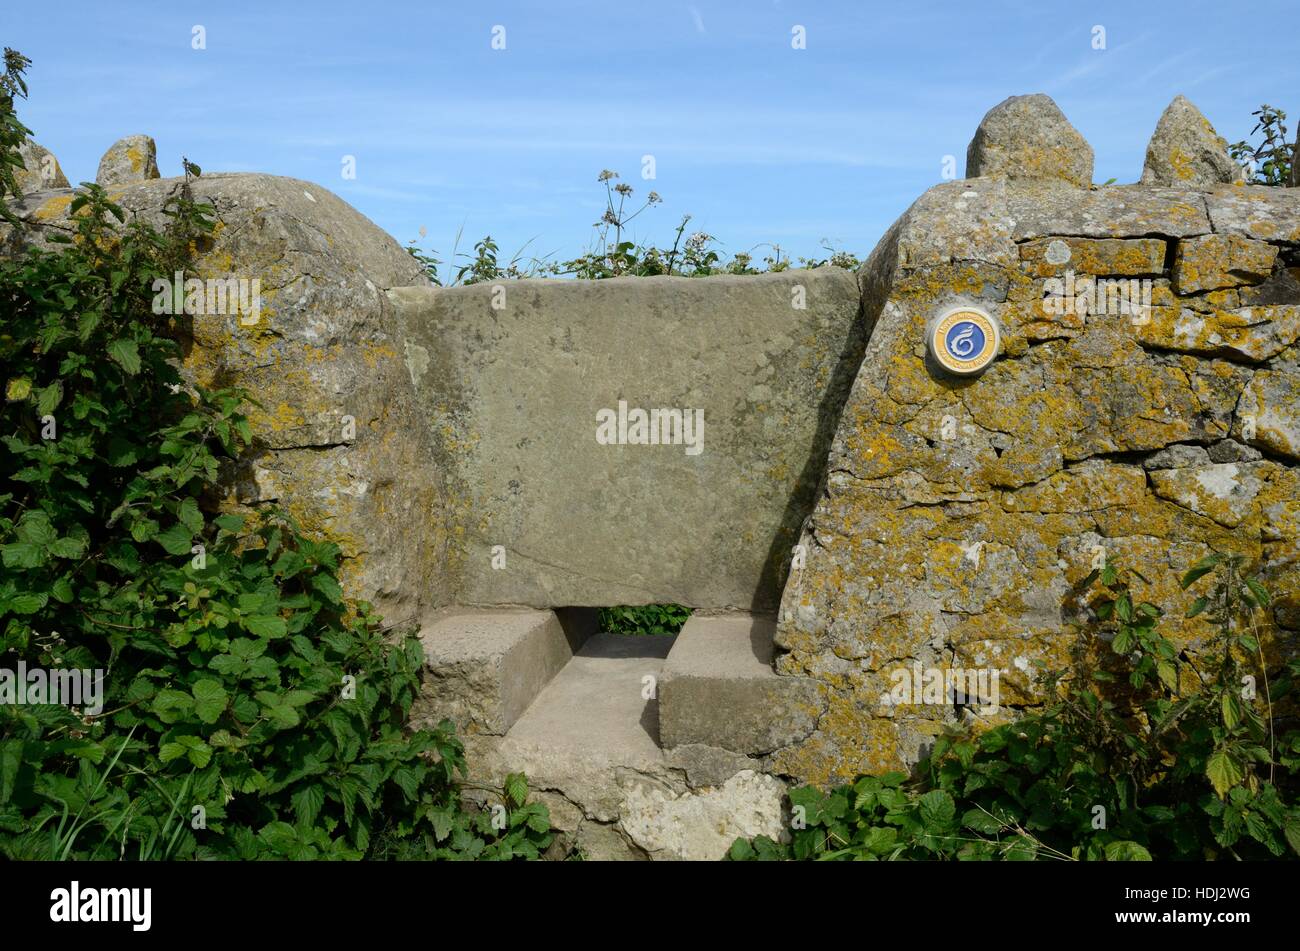 Wales Coast path sign on an old stone style Nash point Glamorgan Heritage Coast Wales Stock Photo